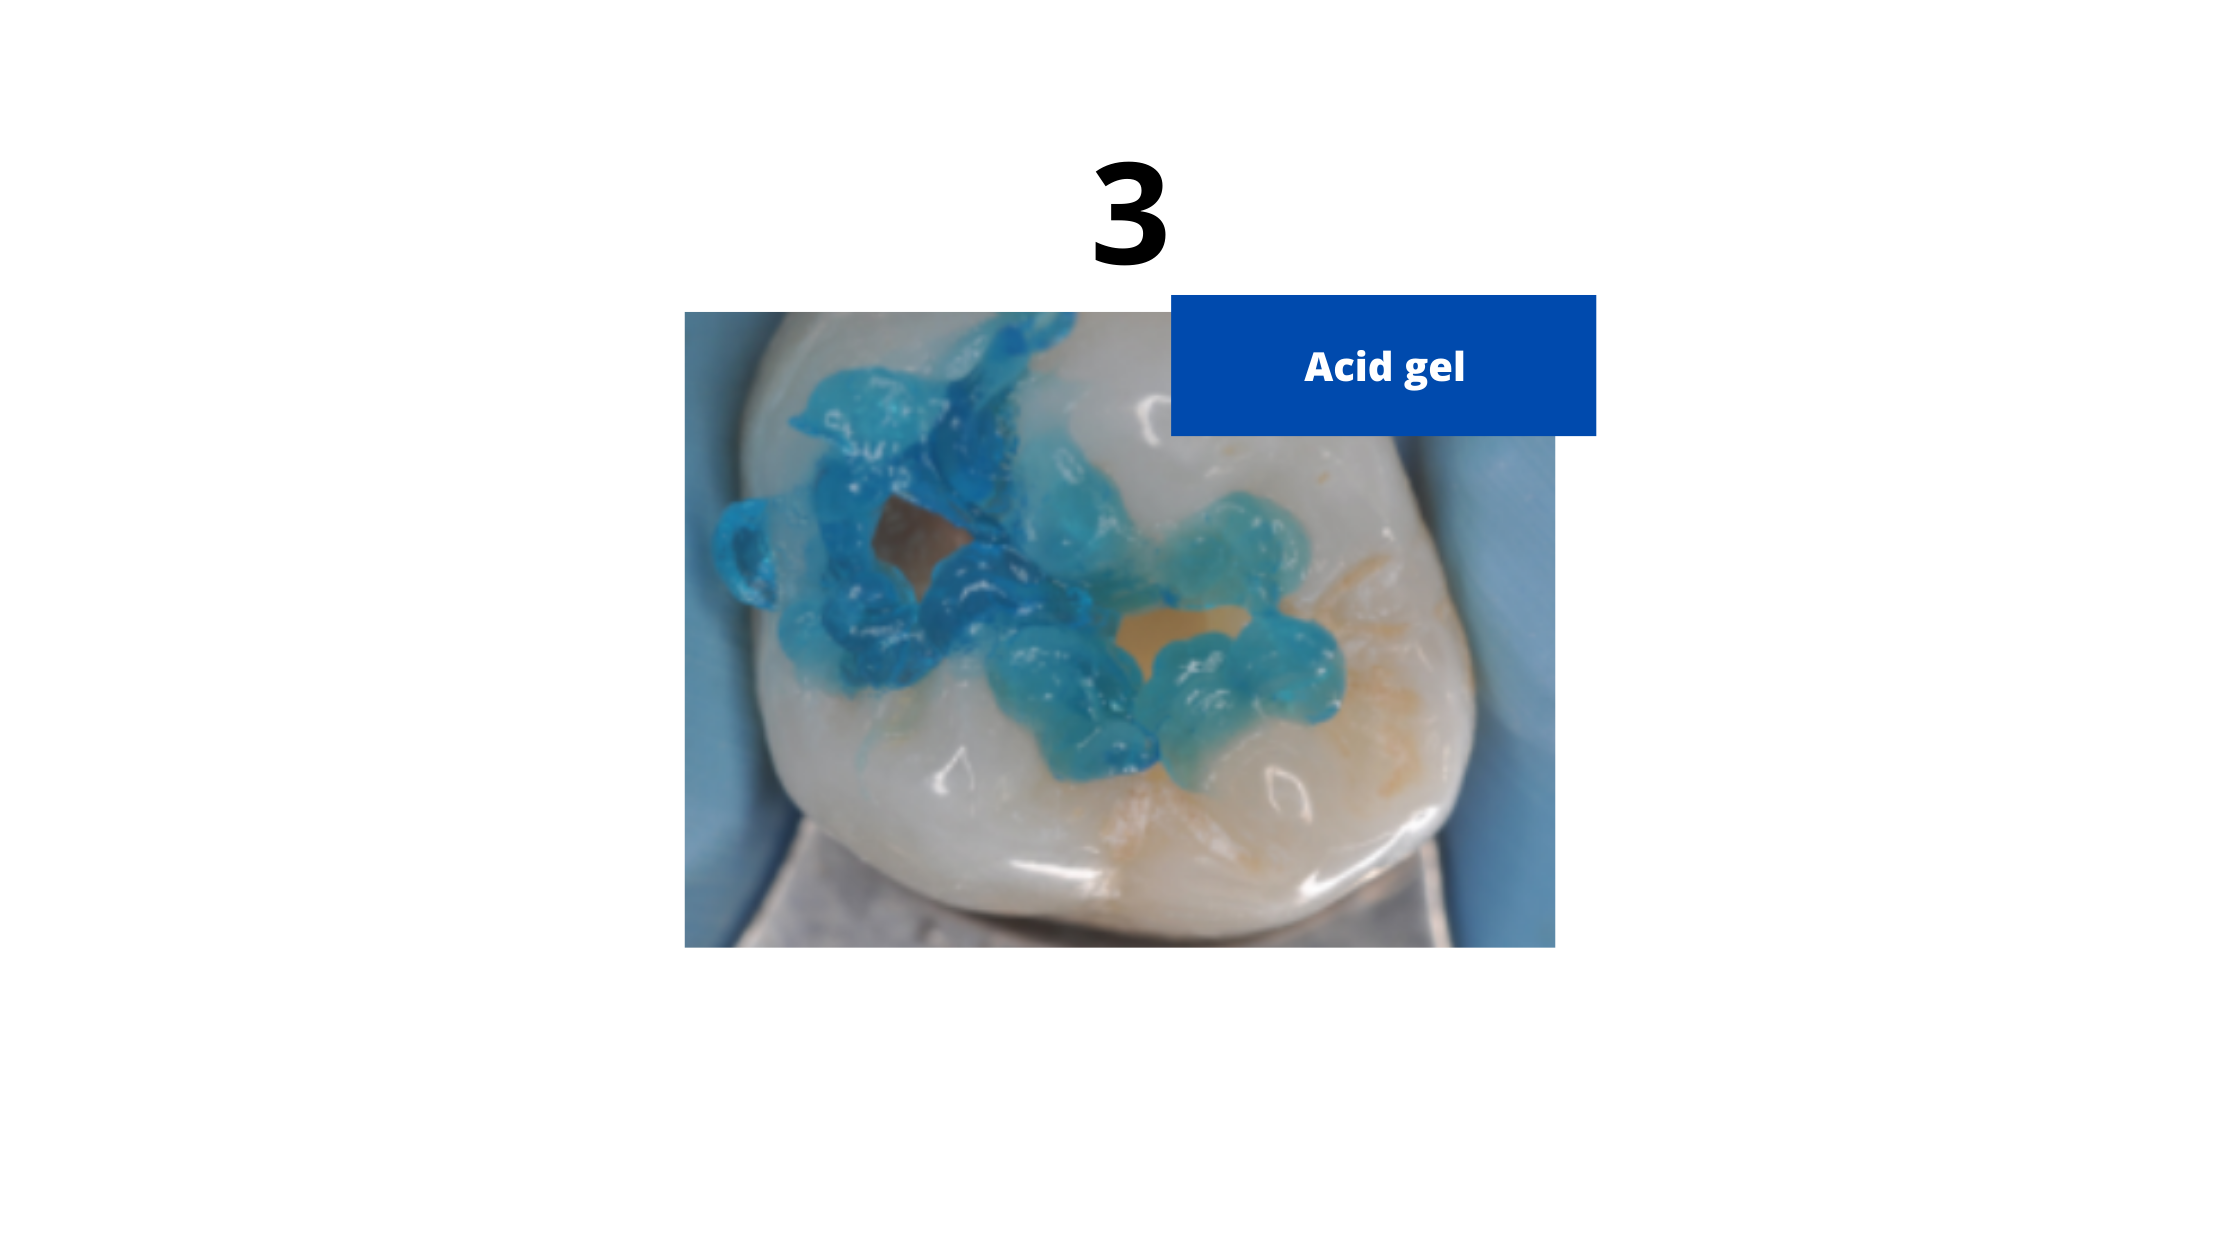 applying acid gel to the tooth